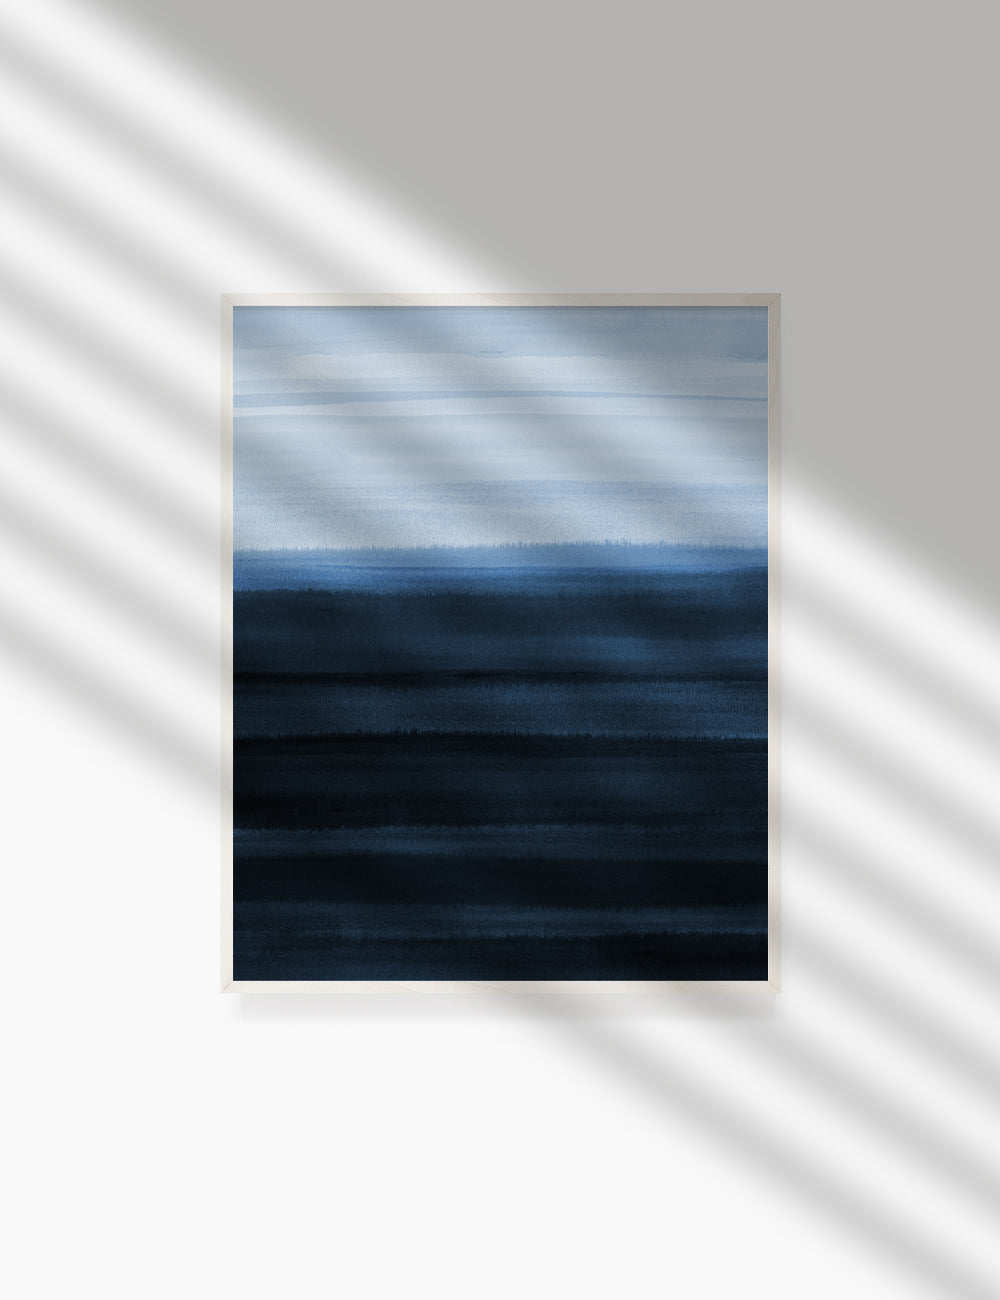 BLUE OCEAN LANDSCAPE. WATERCOLOR PAINTING. Abstract Art. Printable Wall Art Illustration. - PAPER MOON Art & Design